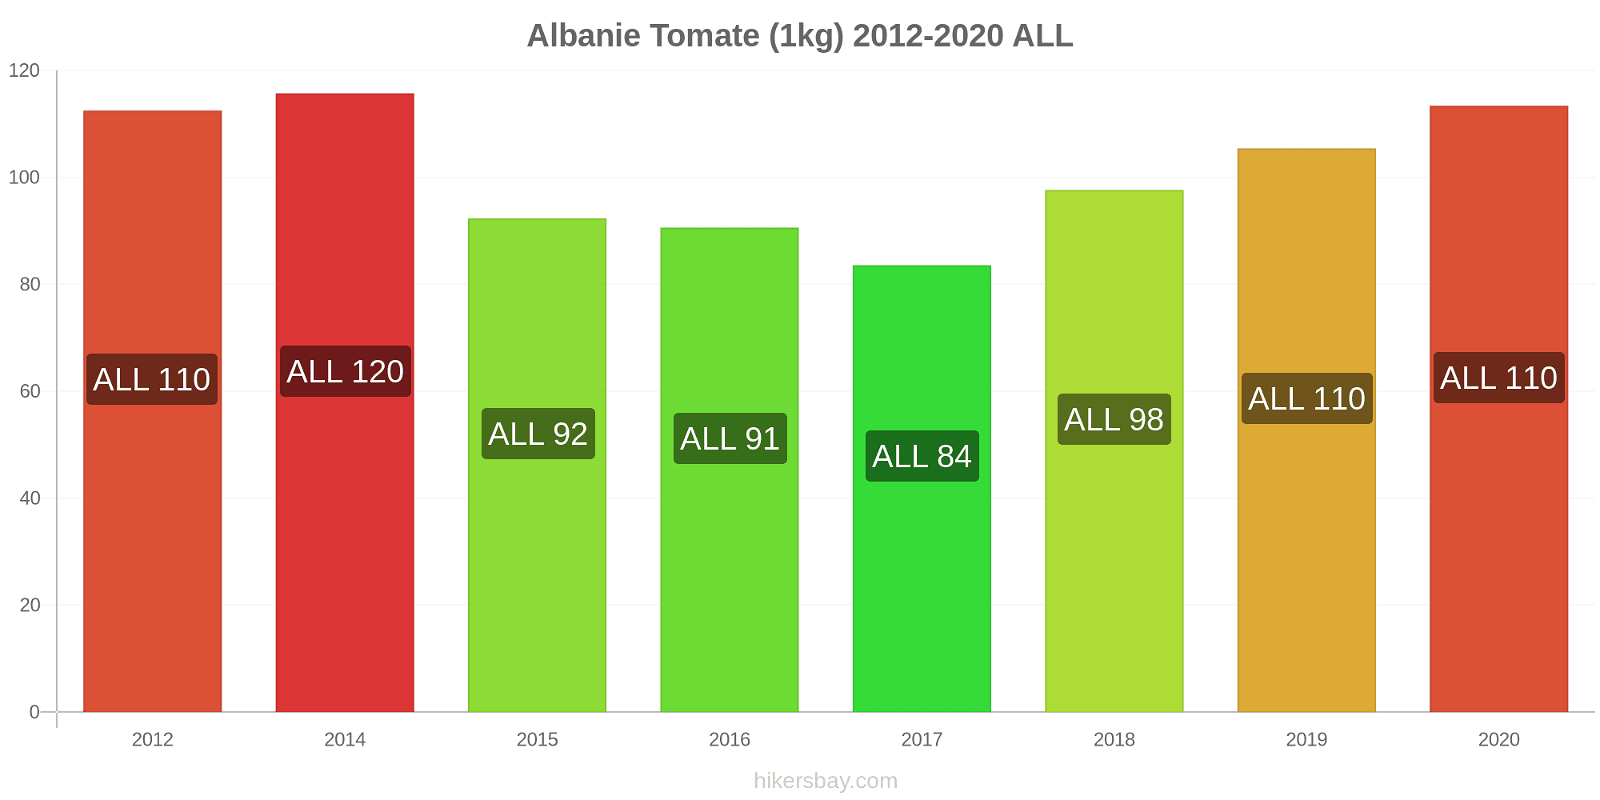 Albanie changements de prix Tomate (1kg) hikersbay.com